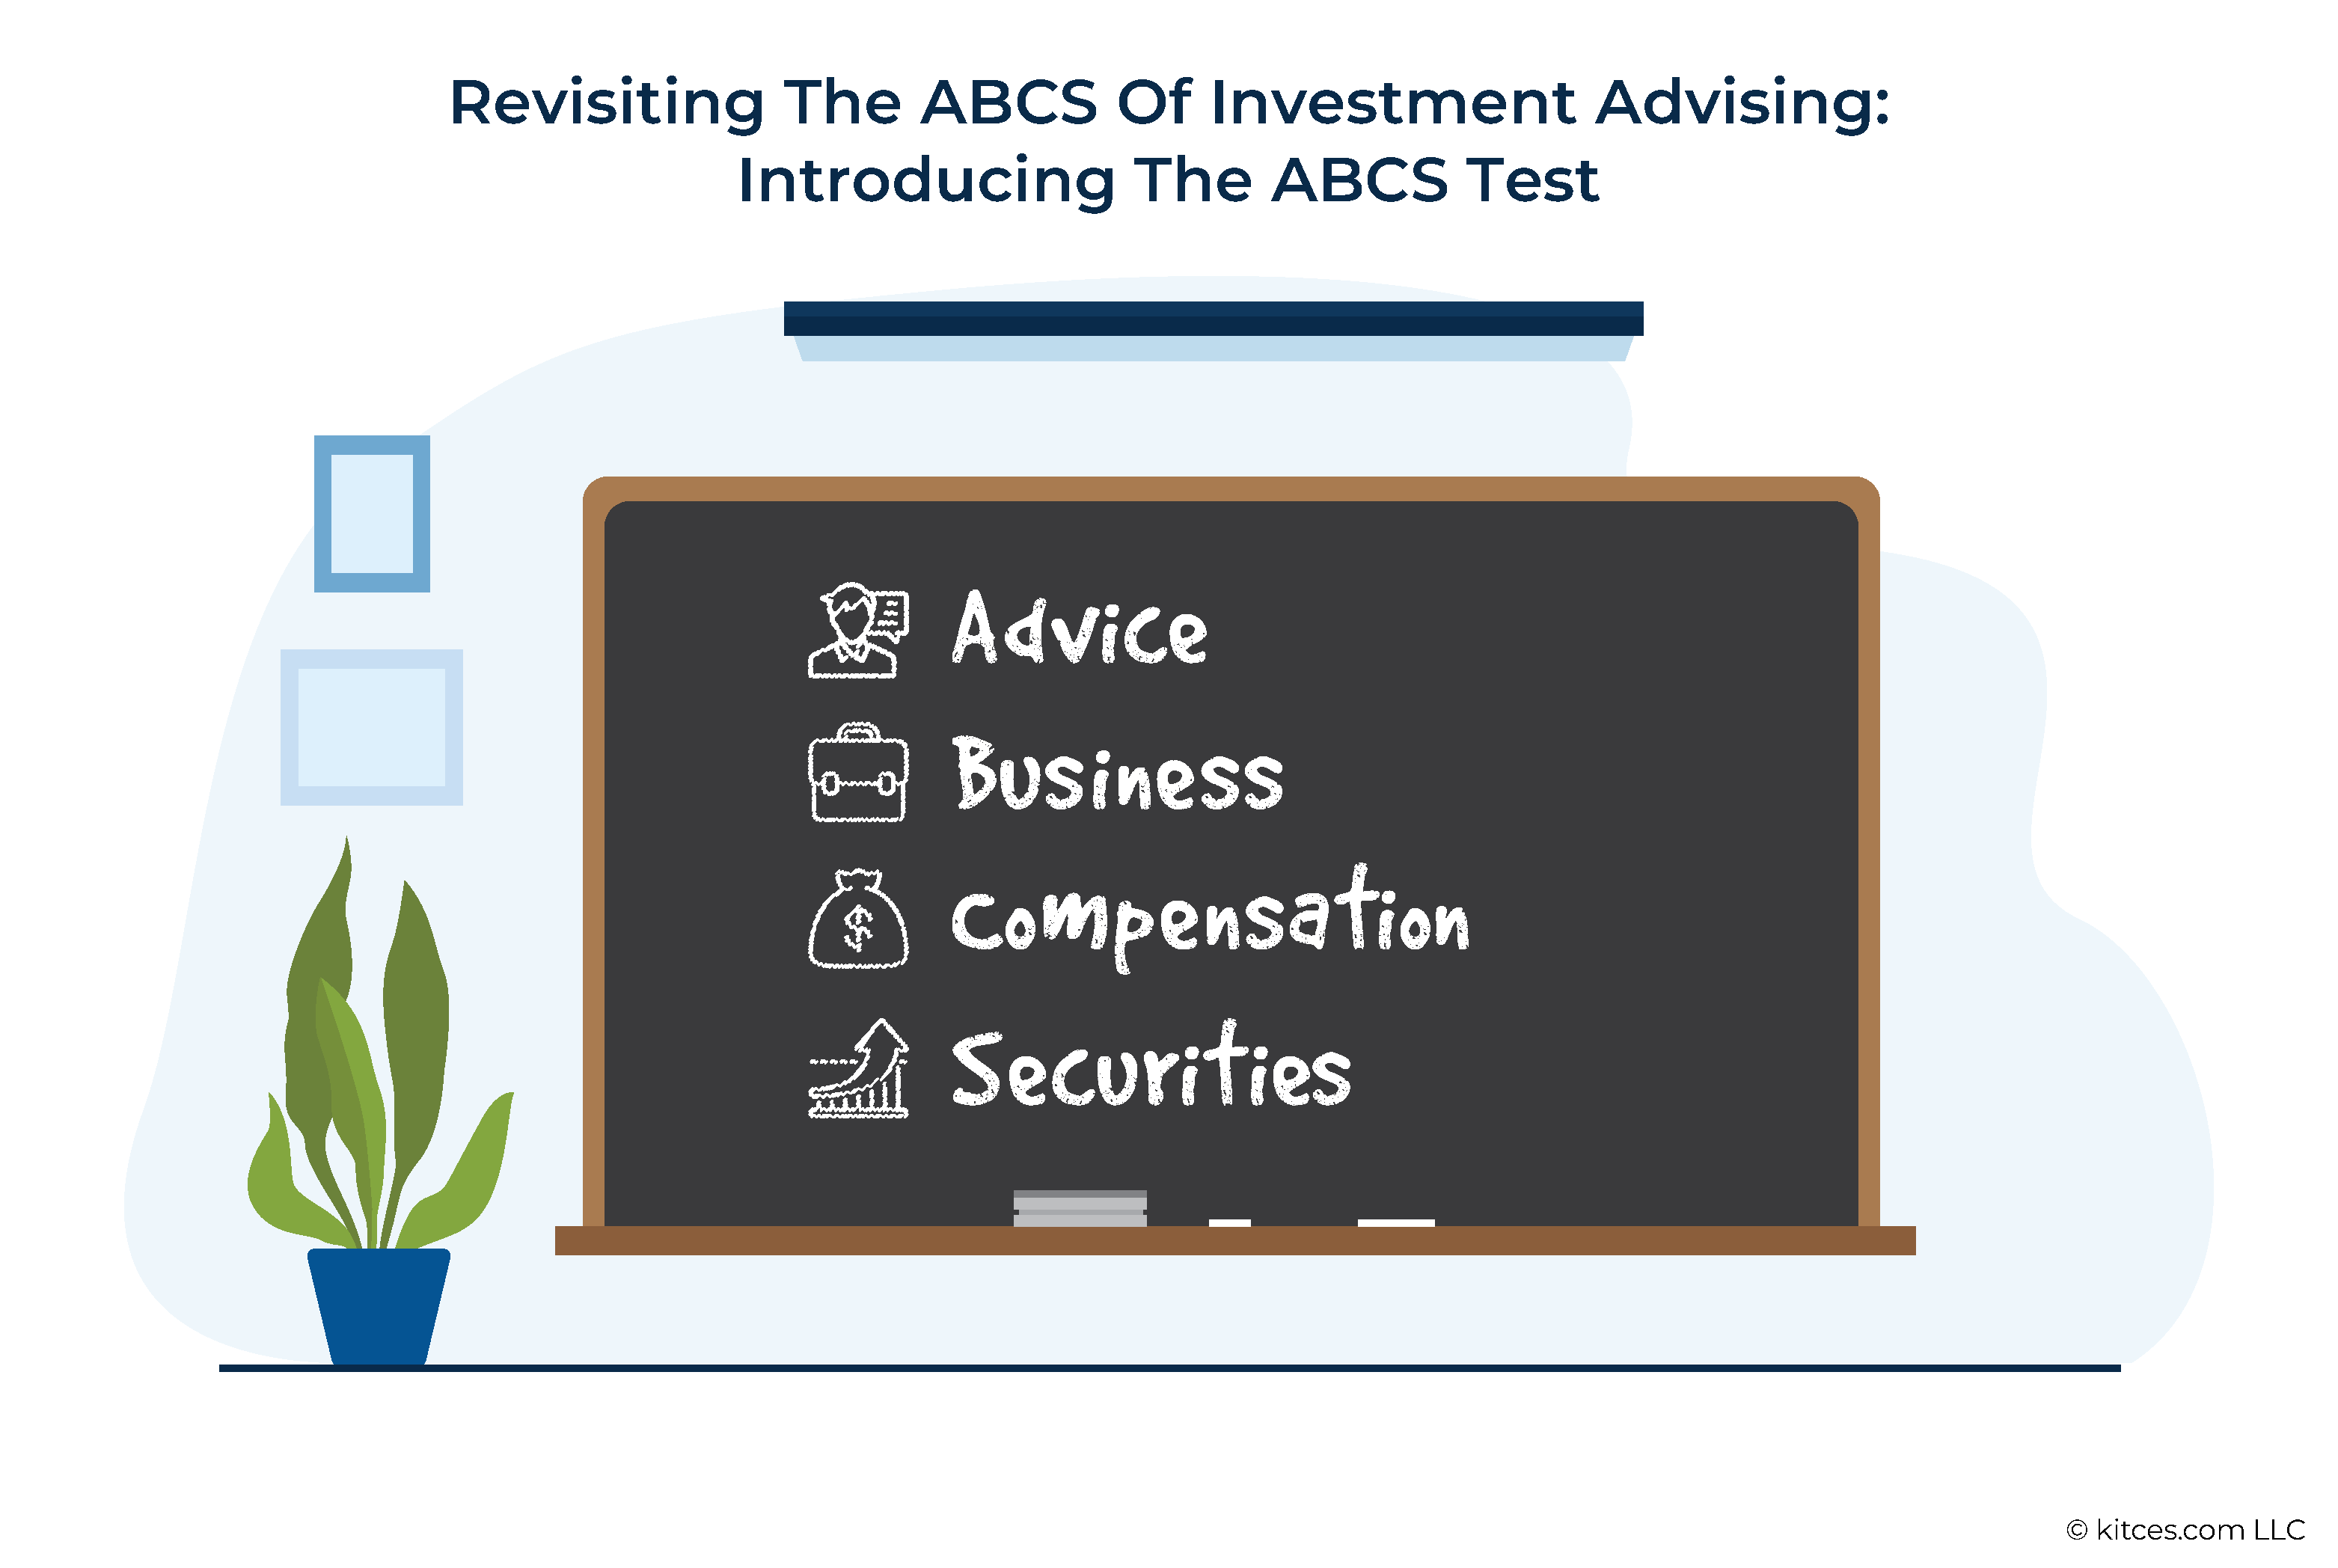 Revisiting The ABCS Of Investment Advising: Determining Investment Adviser Status